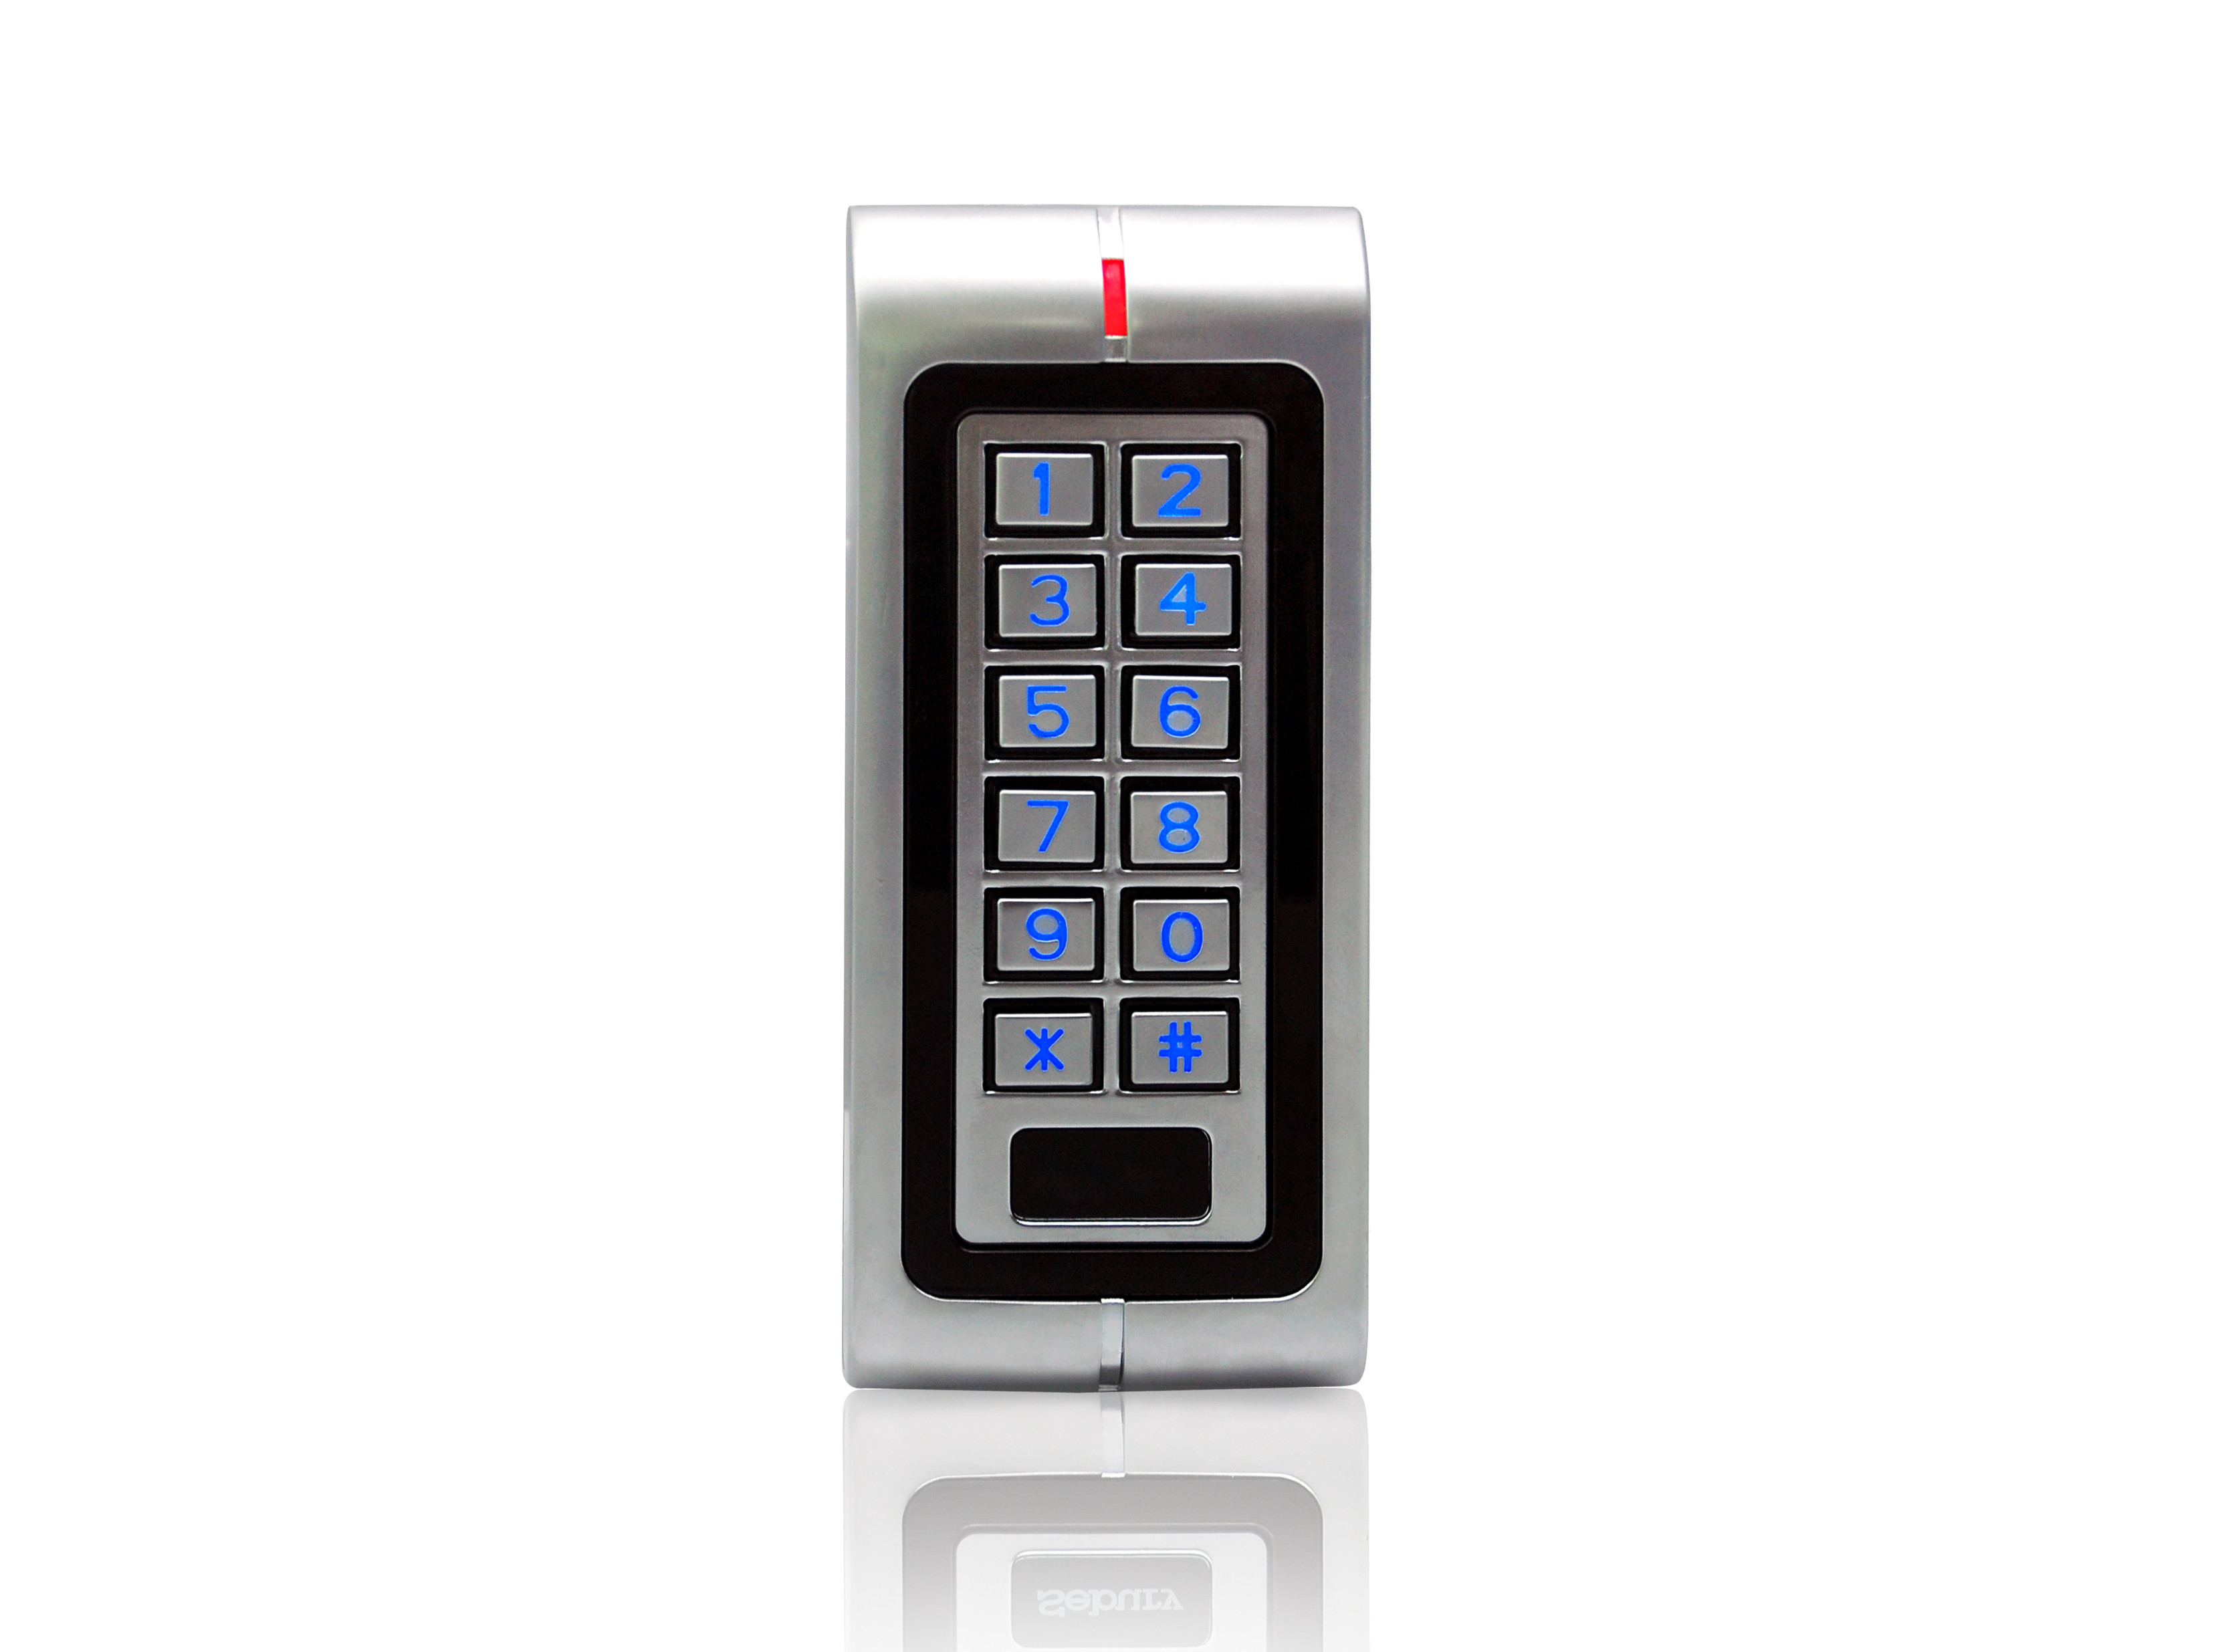 China Wetherproof Metal Standalone Keypad Access Control Gate Entry Keypad wholesale